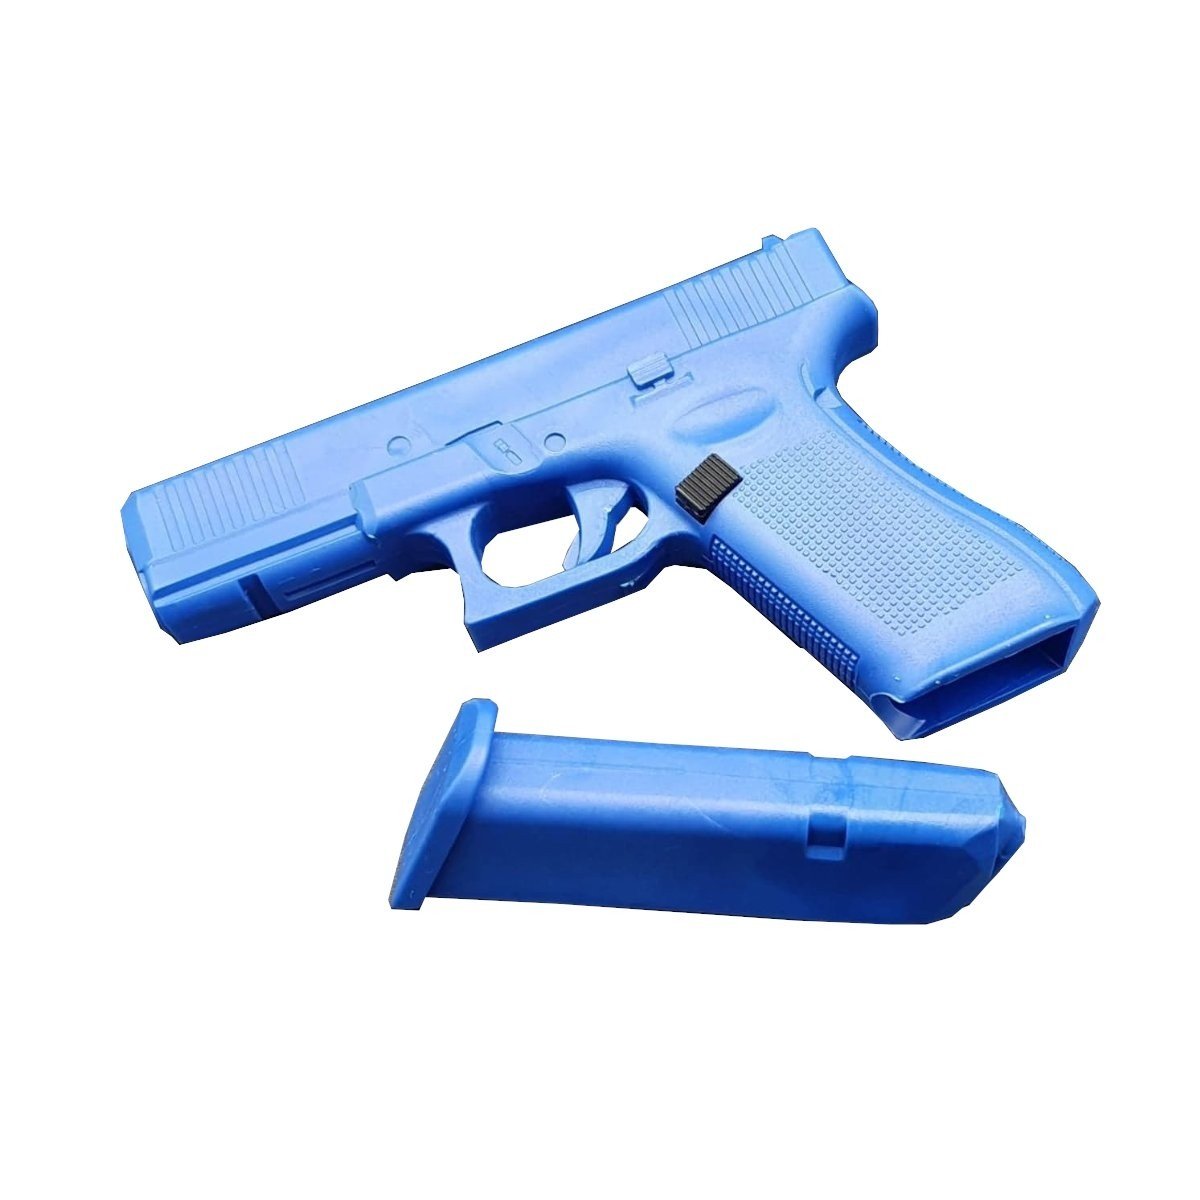 BLUE GUN GLOCK 17 AVEC CHARGEUR (MEDHY-GLOCK-BG)